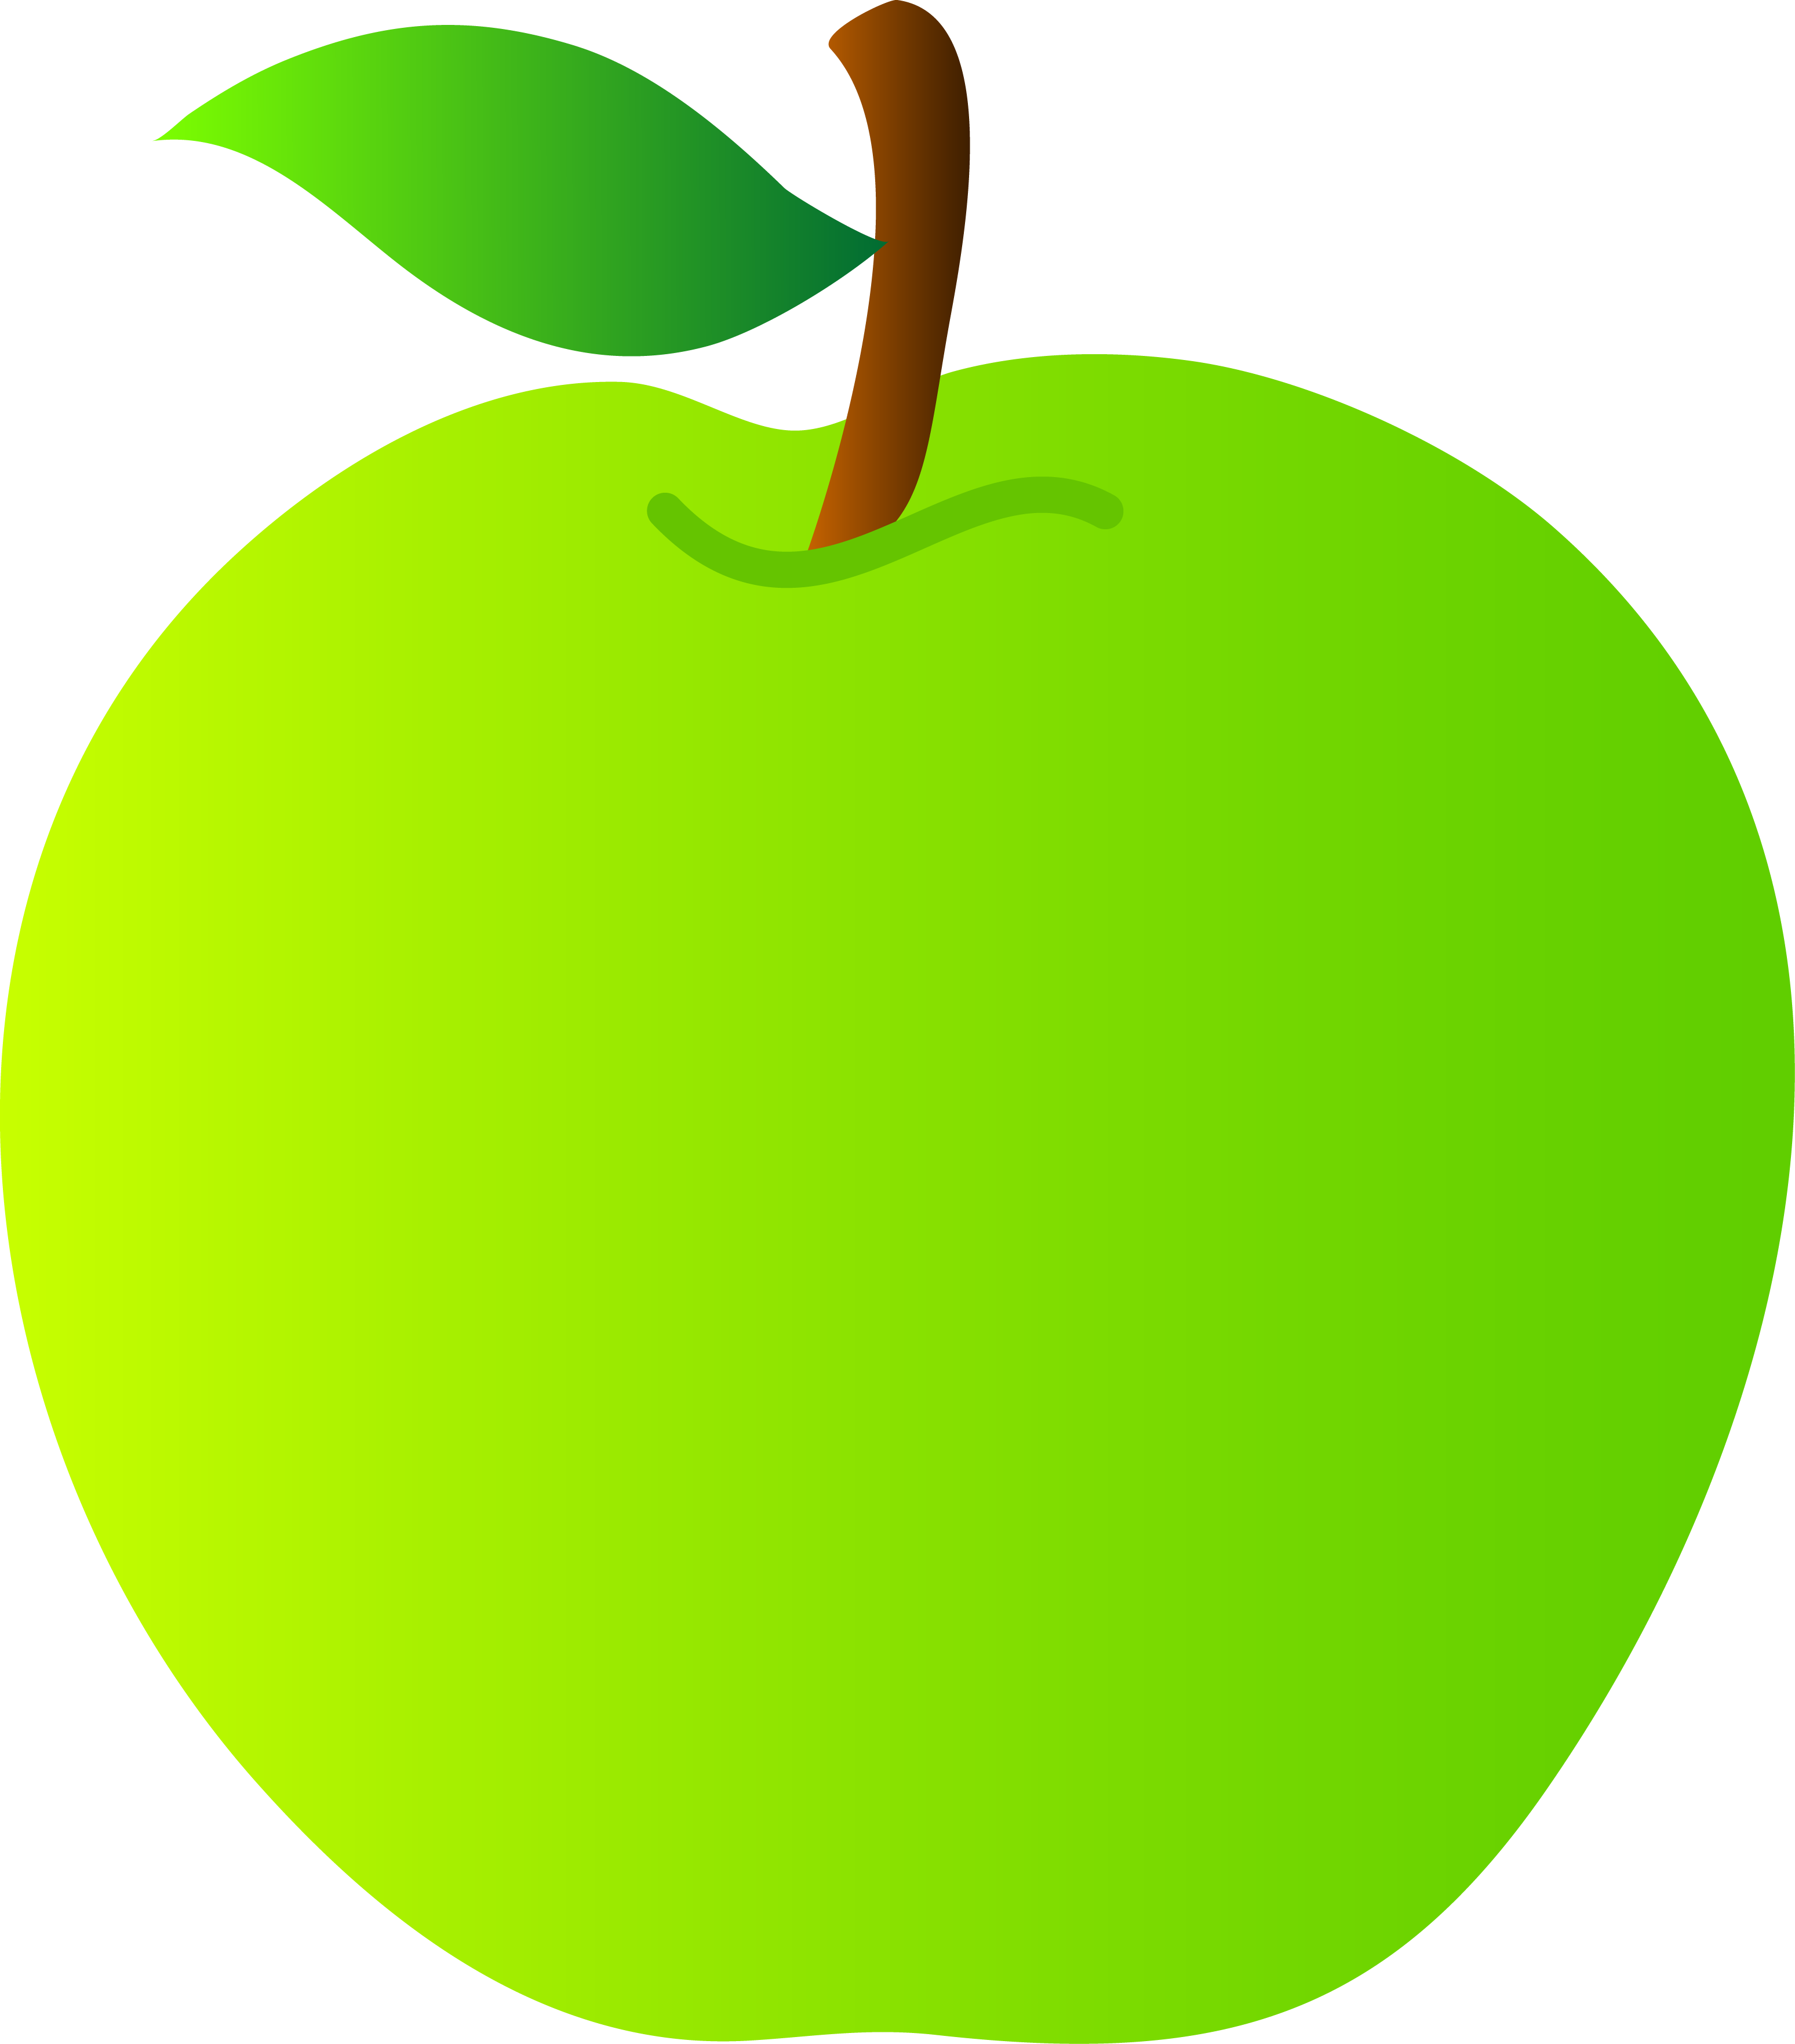 Free Green Apple Transparent, Download Free Green Apple Transparent png ...